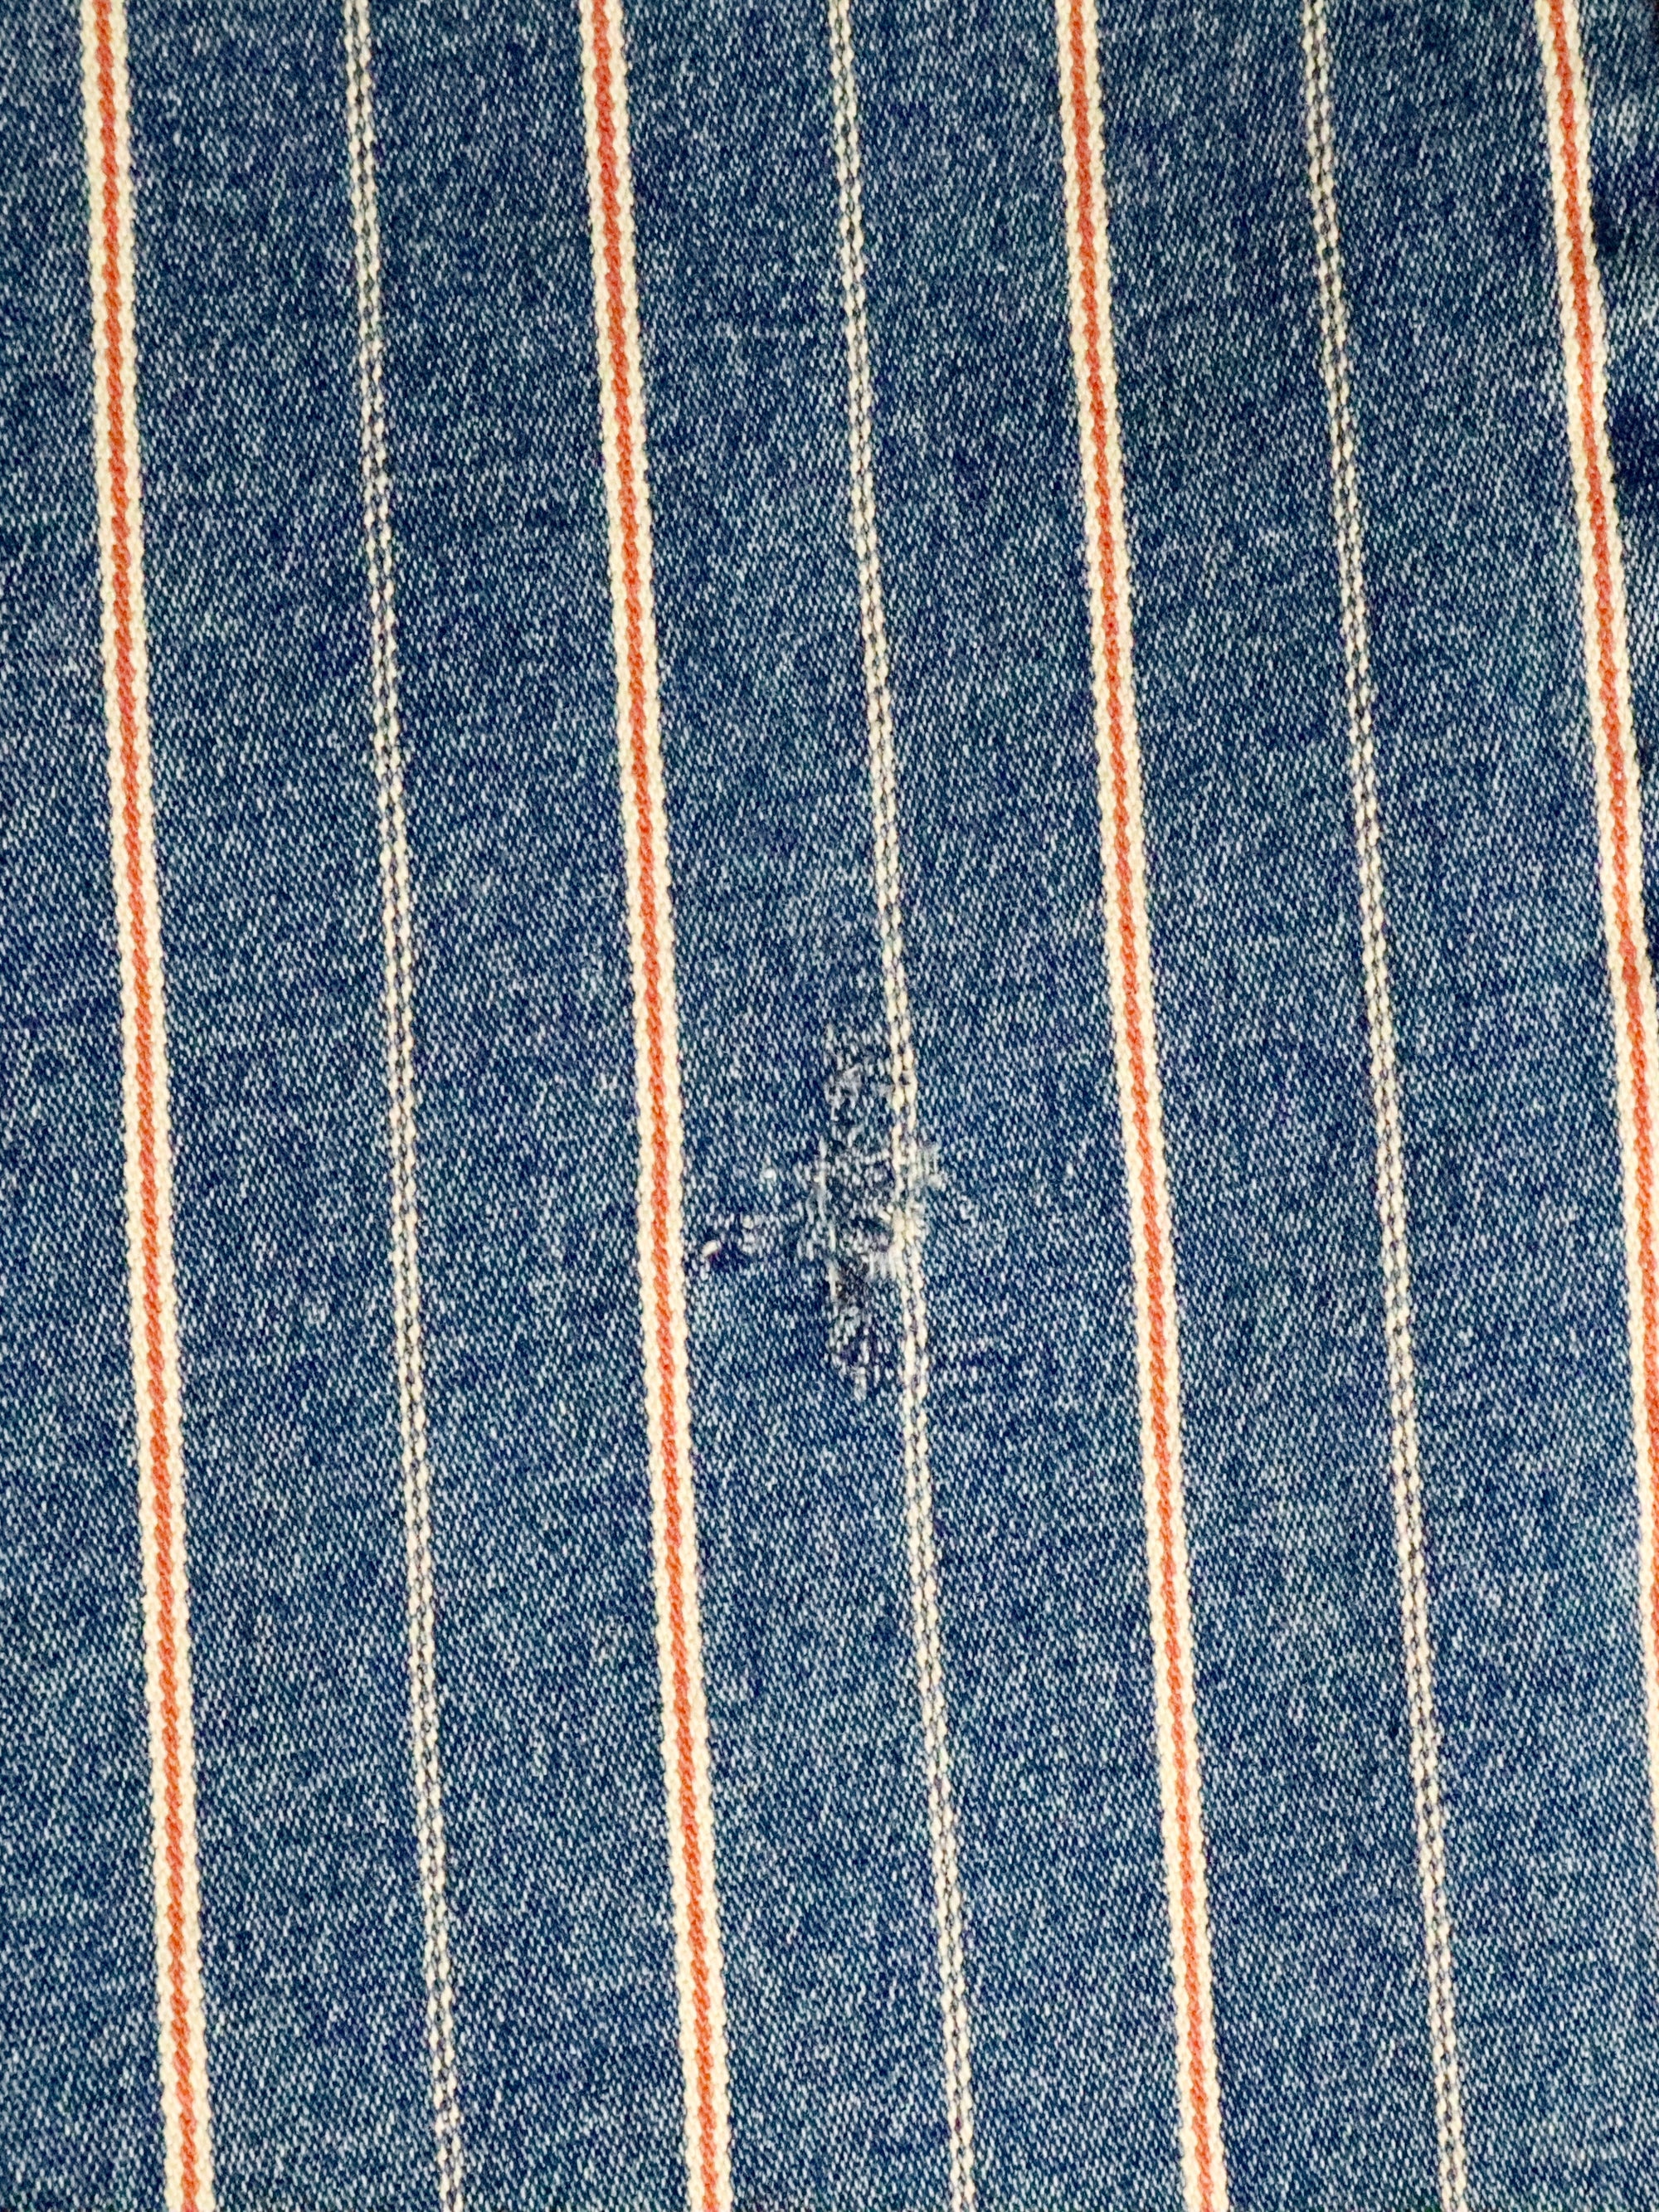 Pinstripe Buckle Flare Jeans (Medium) 